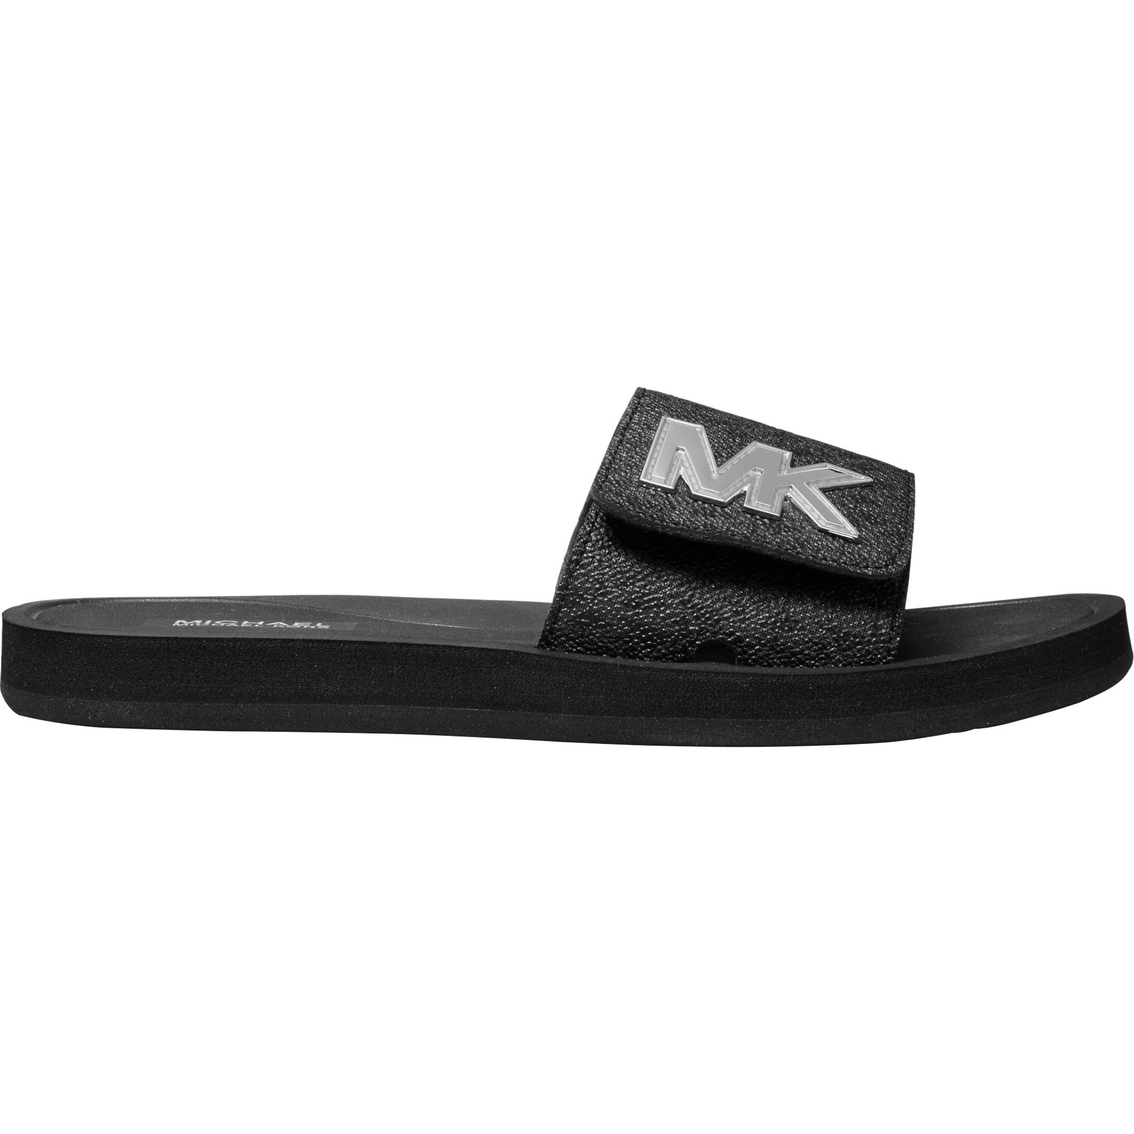 Michael Kors Mk Slides | Flats | Shoes | Shop The Exchange